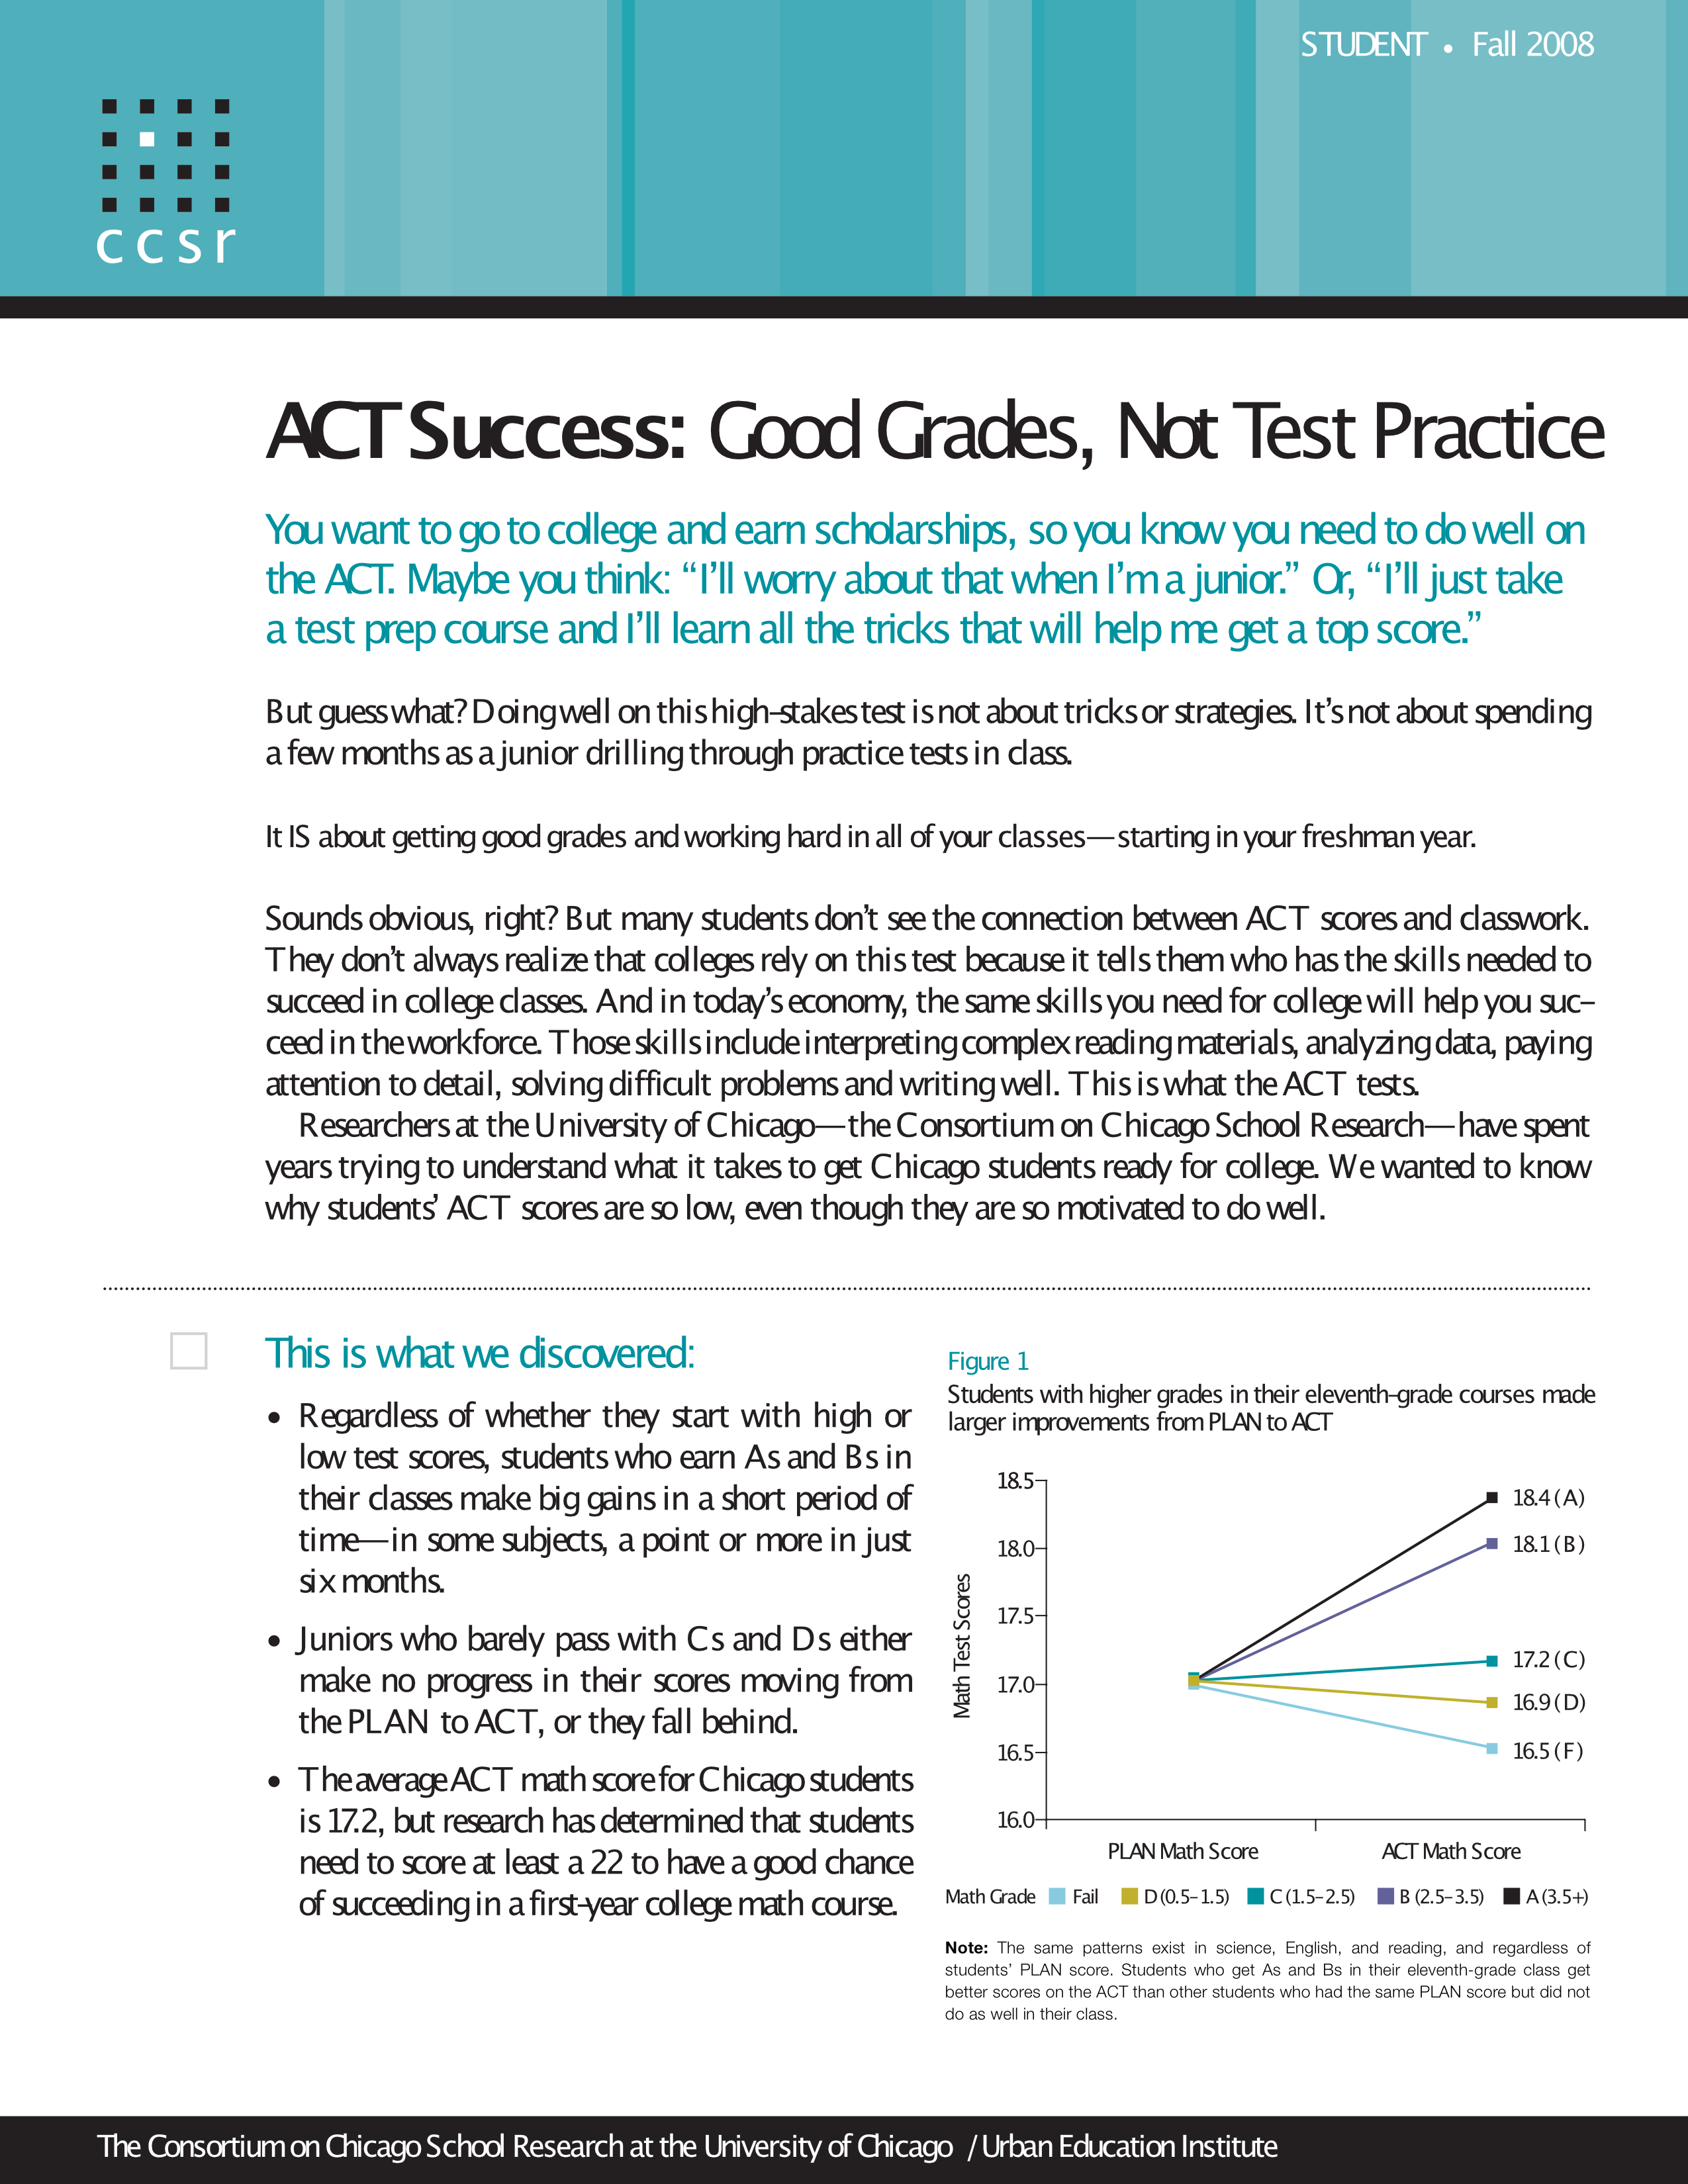 ACT Success: Good Grades, Not Test Practice - Student Memo